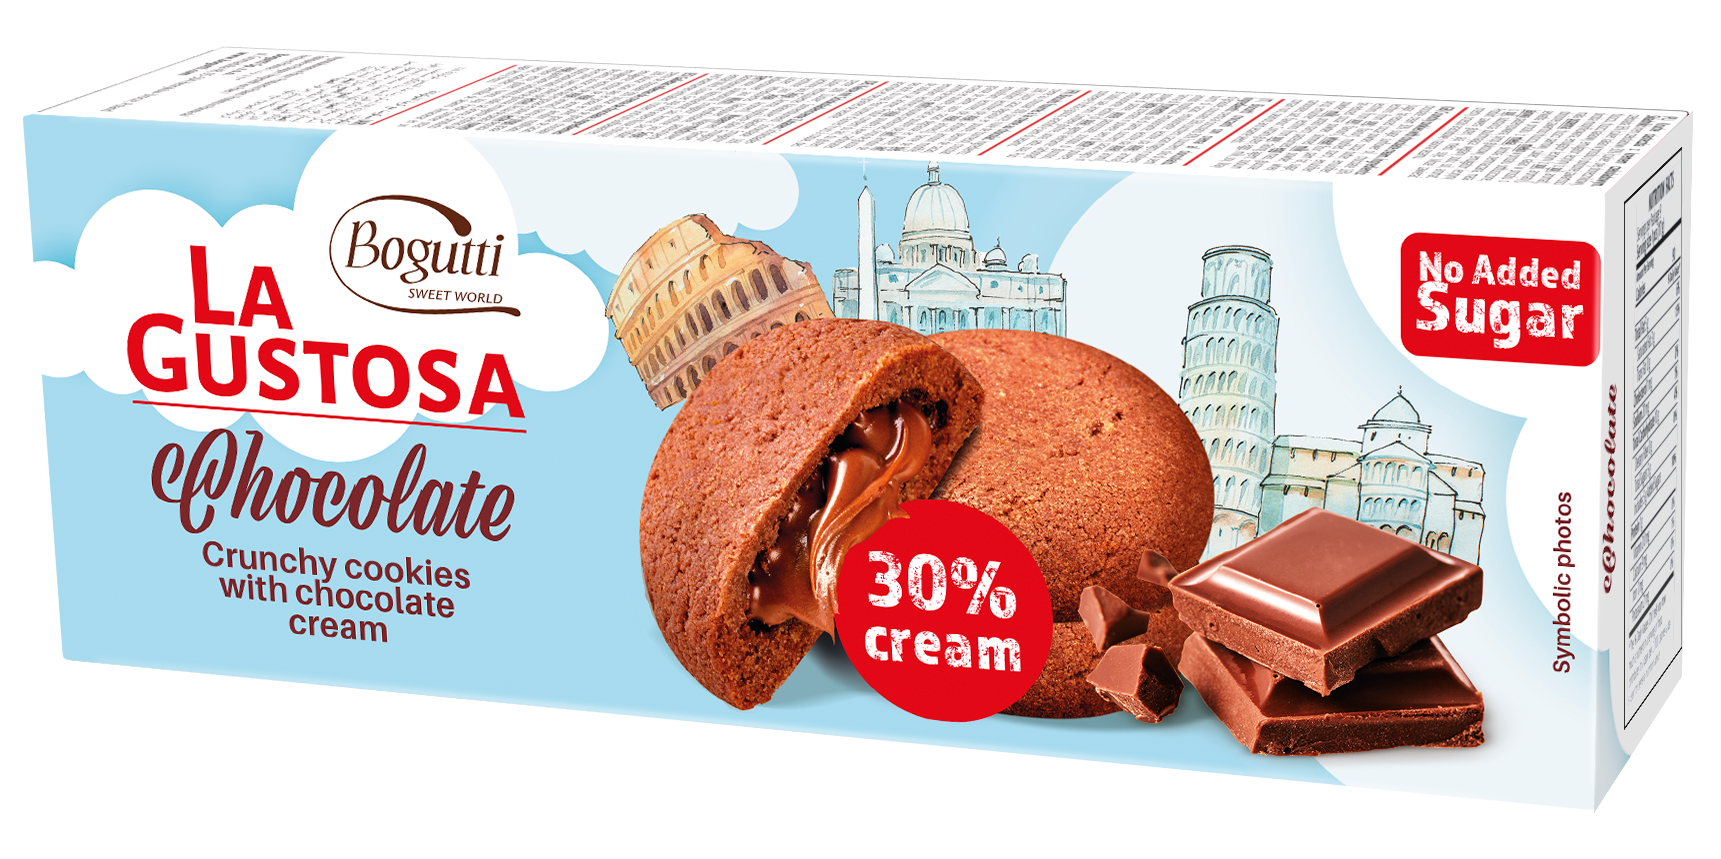 La Gustosa – Crunchy cookies with chocolate cream no added sugar